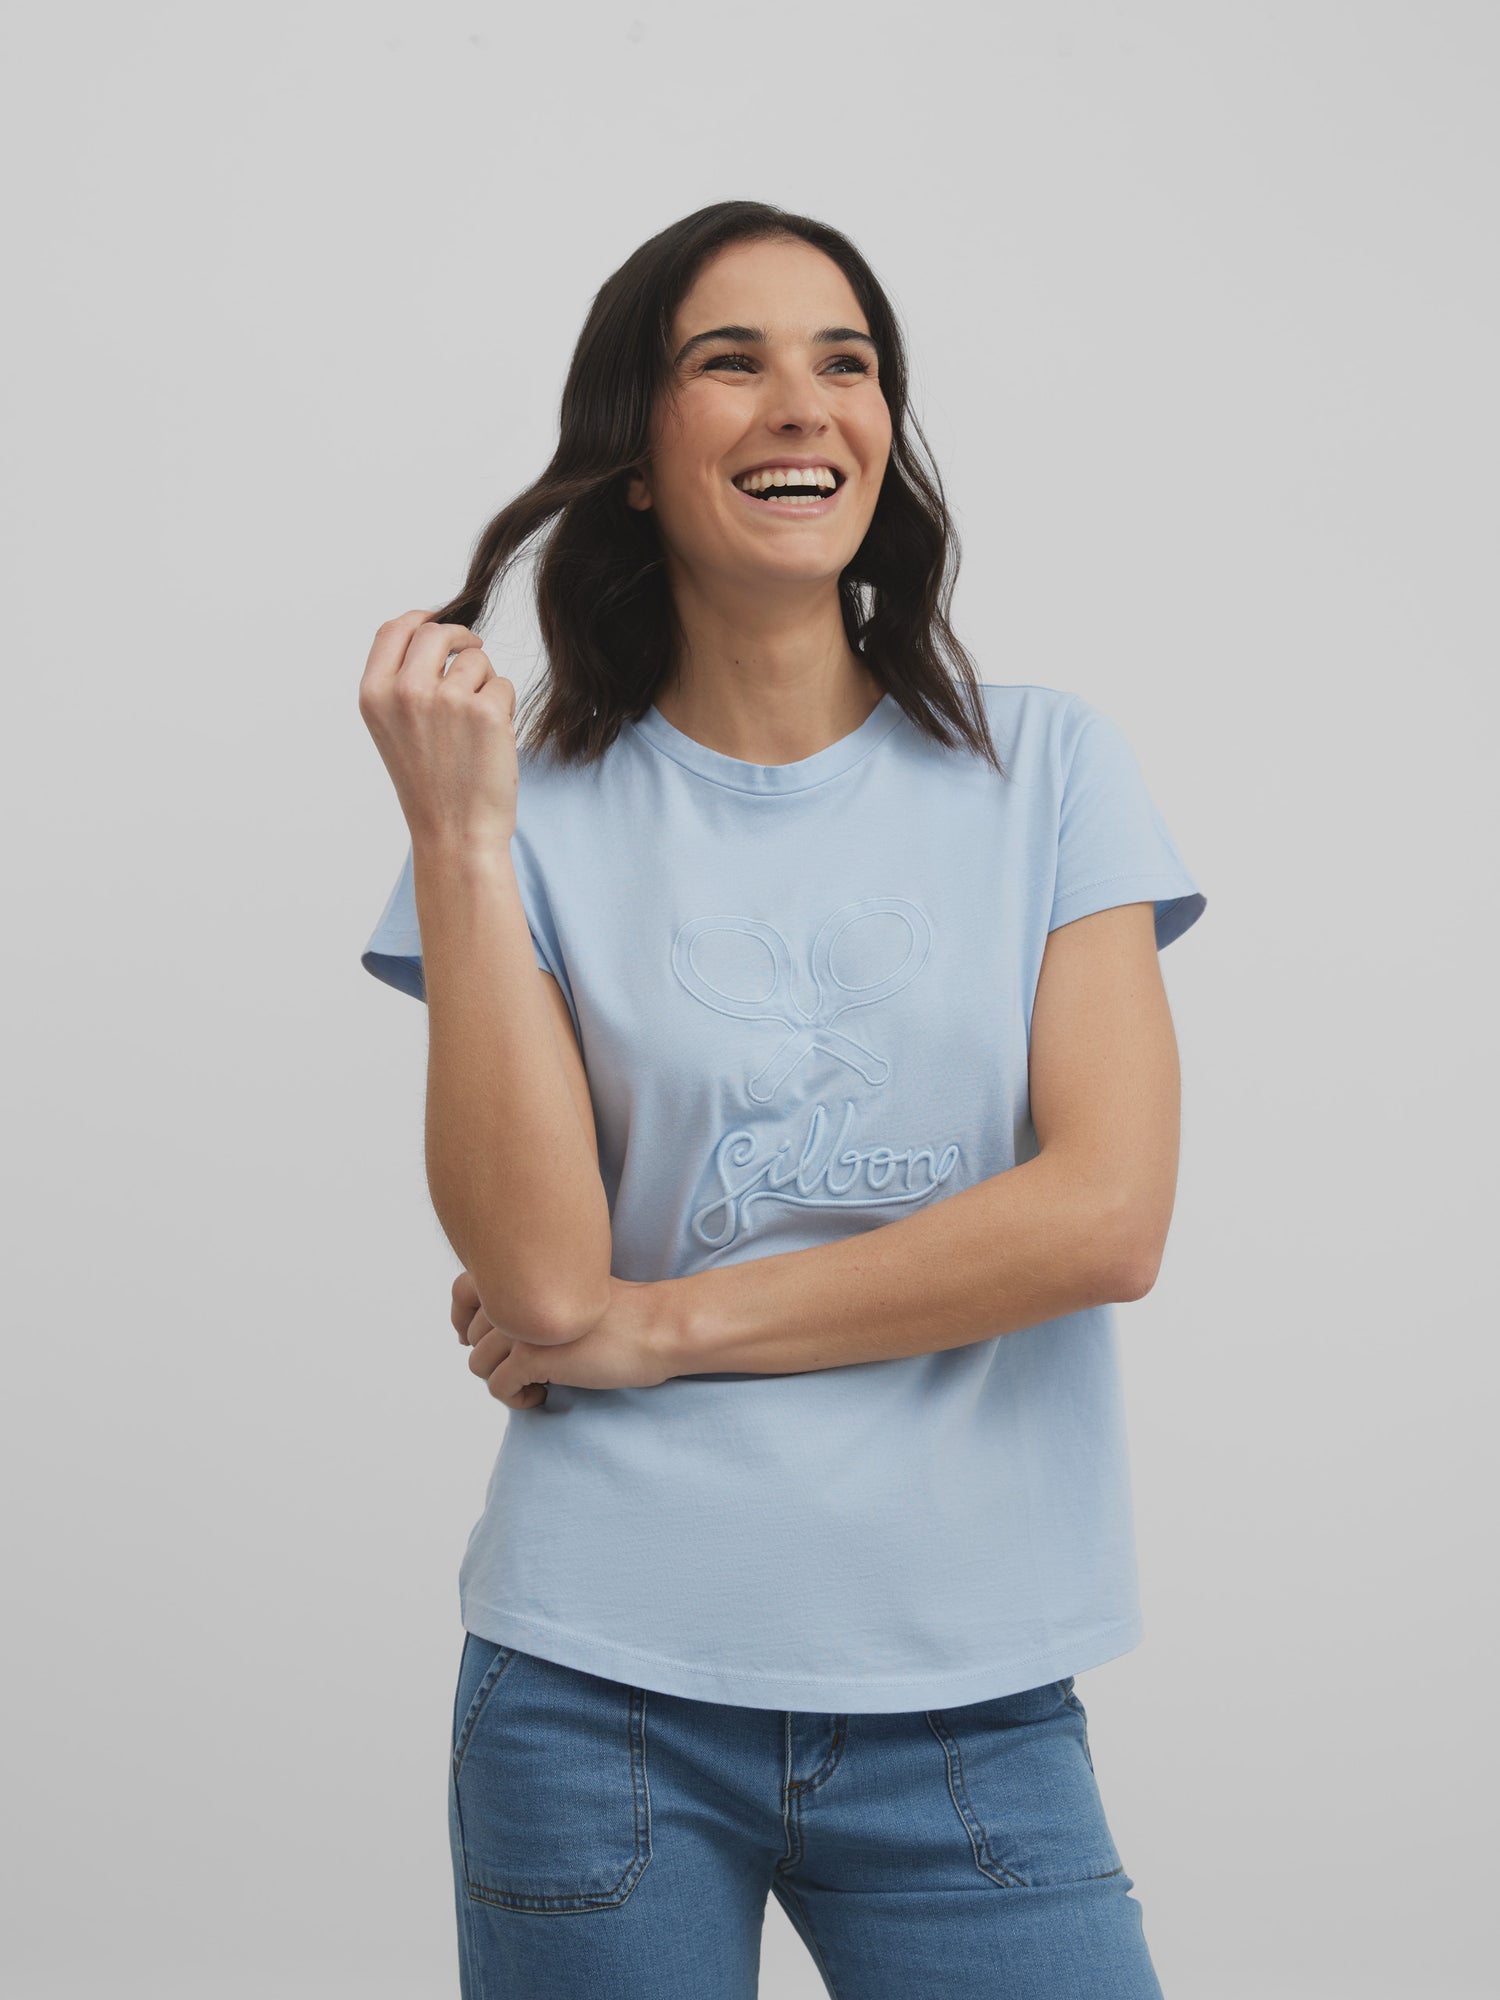 T-shirt femme classique bleu clair